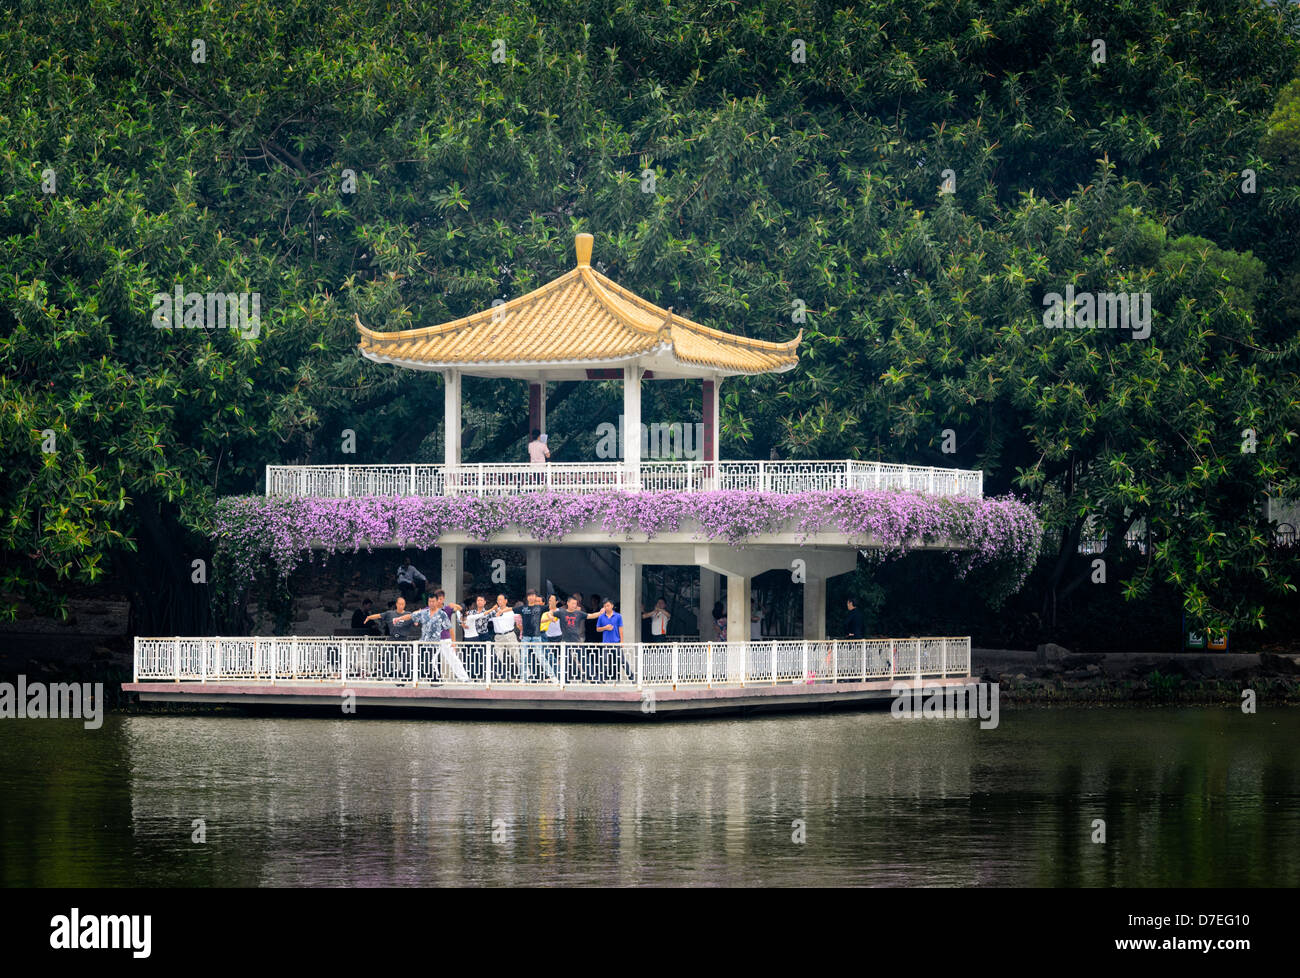 La pagoda cinese in un lago in un parco in Cina. Foto Stock